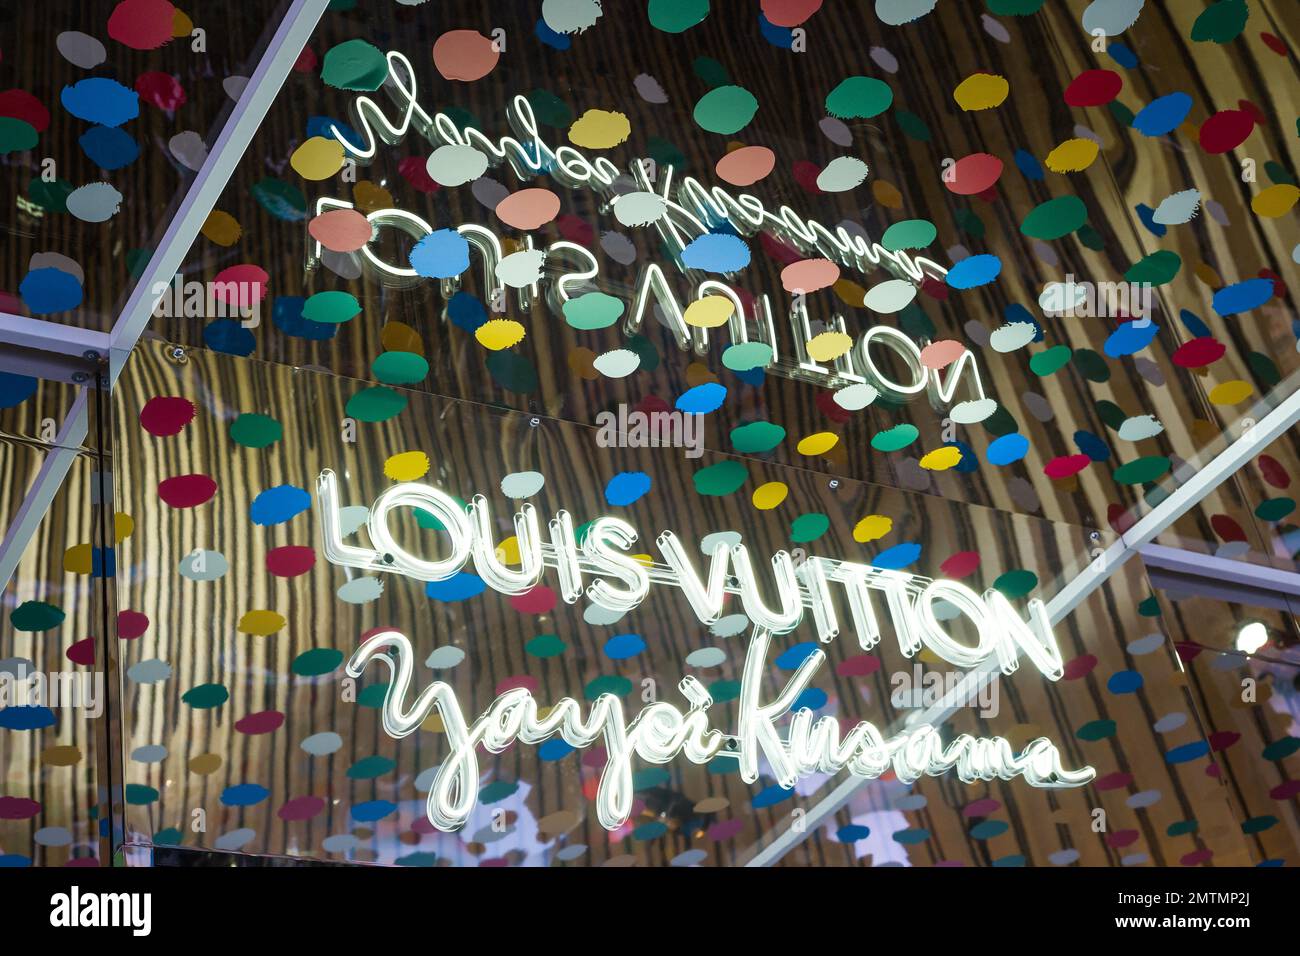 665 Louis Vuitton Champs Elysées Stock Photos, High-Res Pictures, and  Images - Getty Images